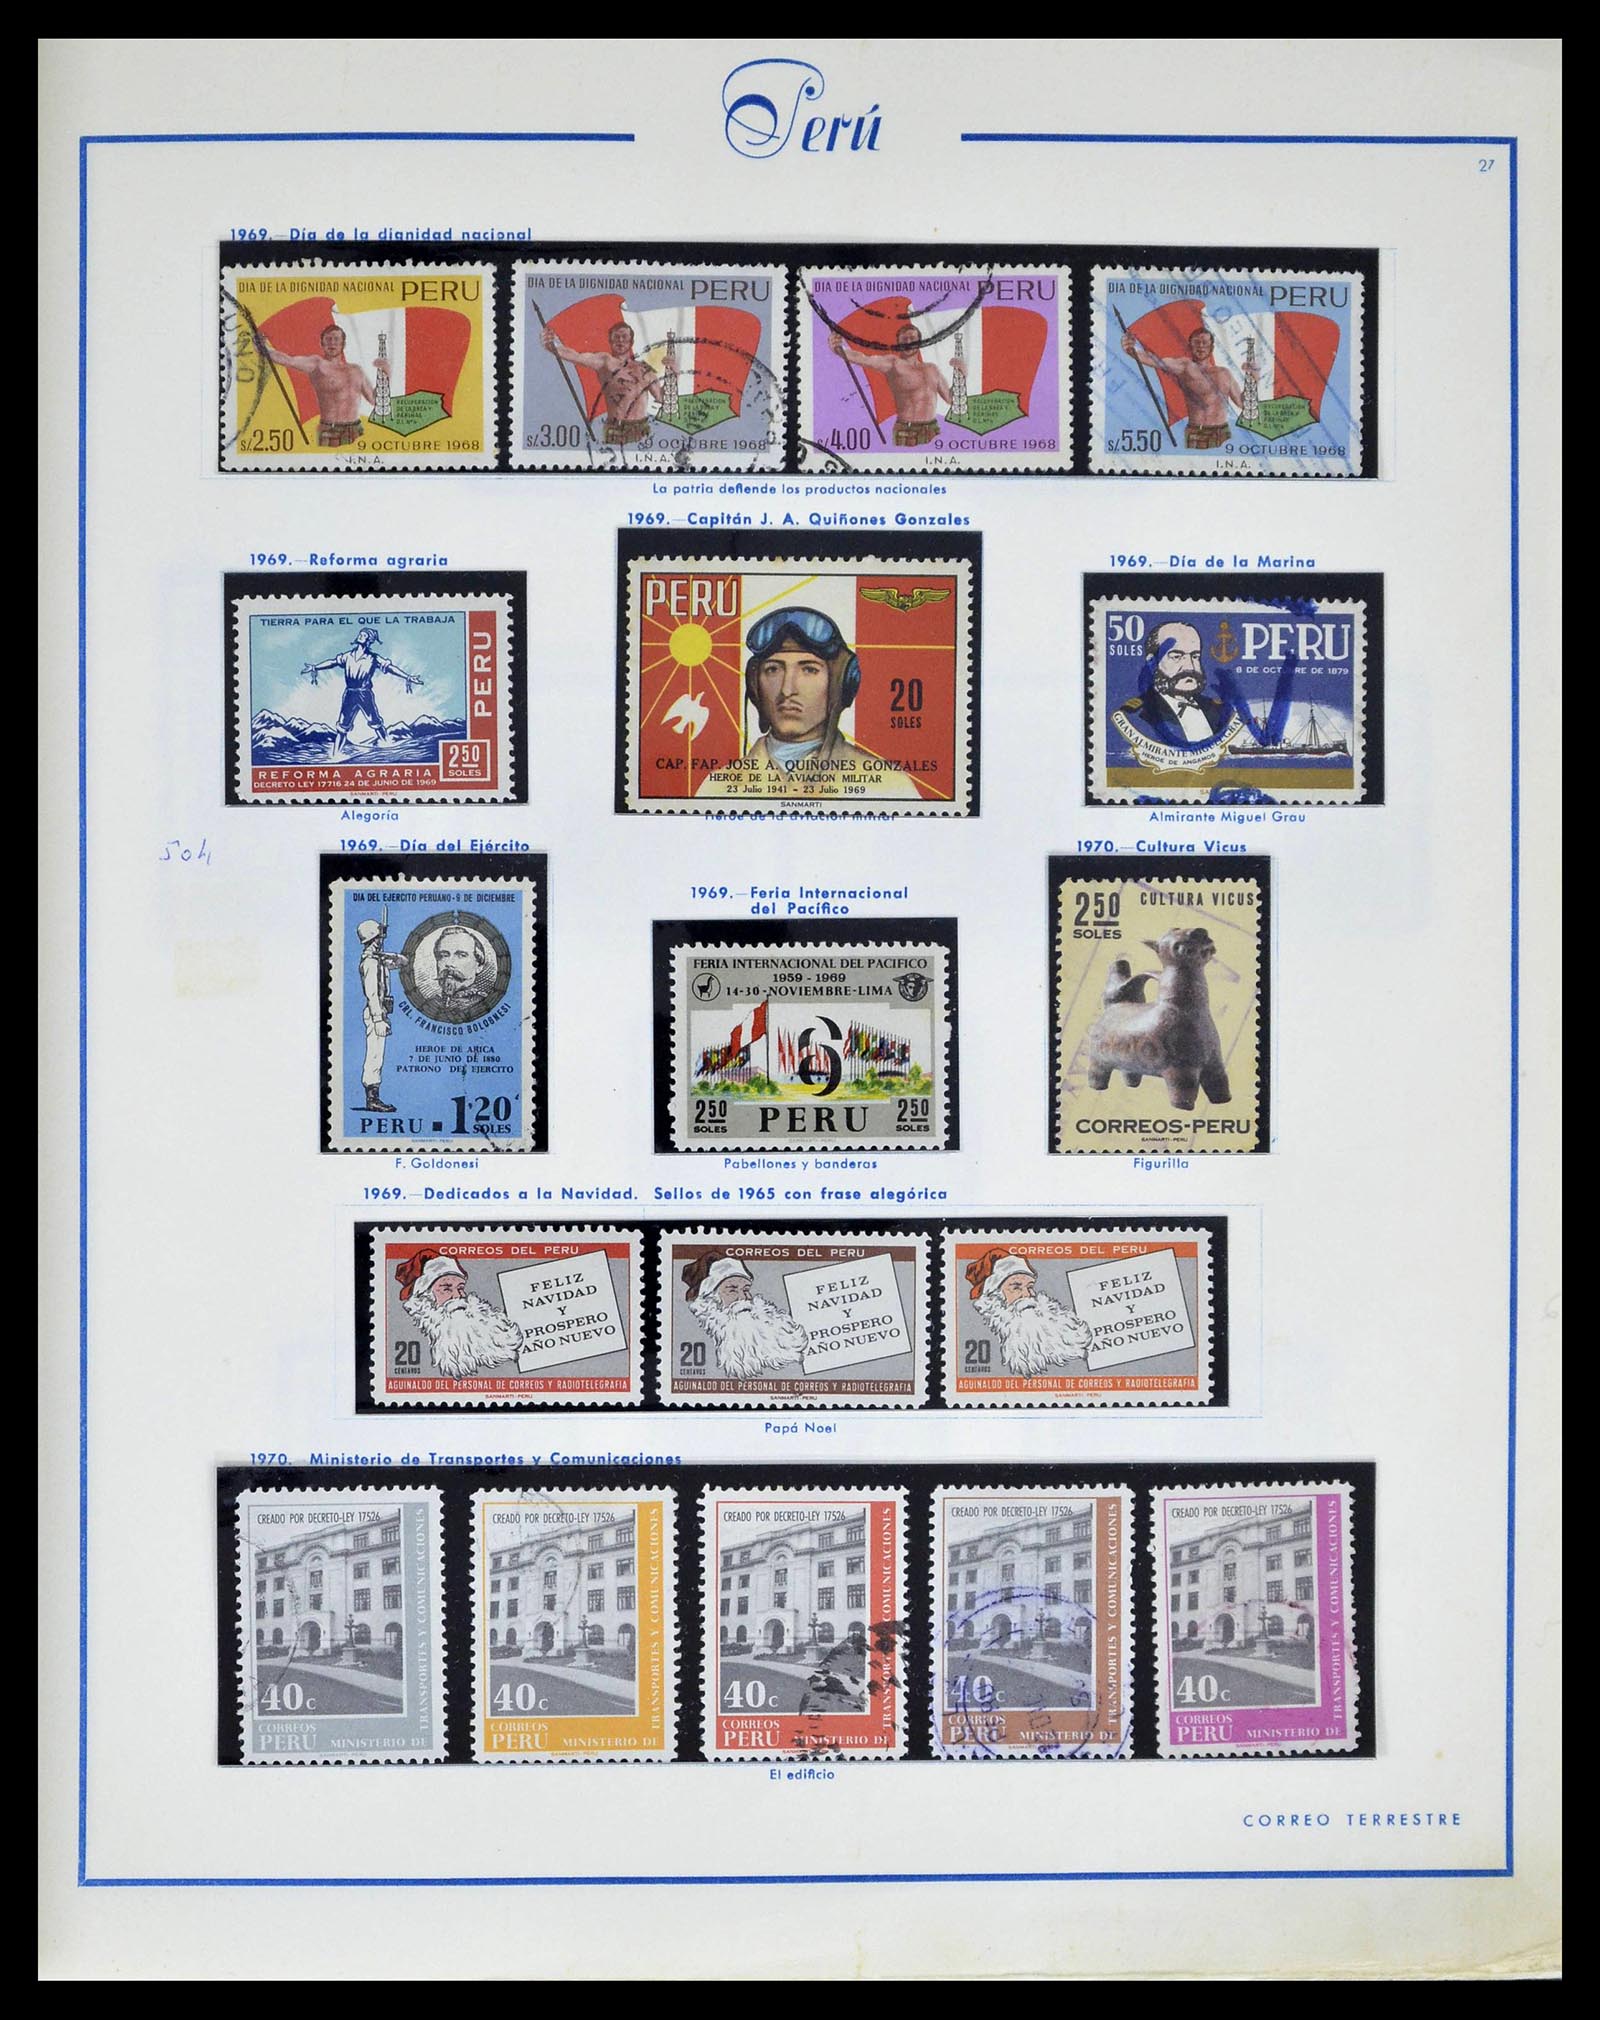 39214 0029 - Stamp collection 39214 Peru 1857-1981.